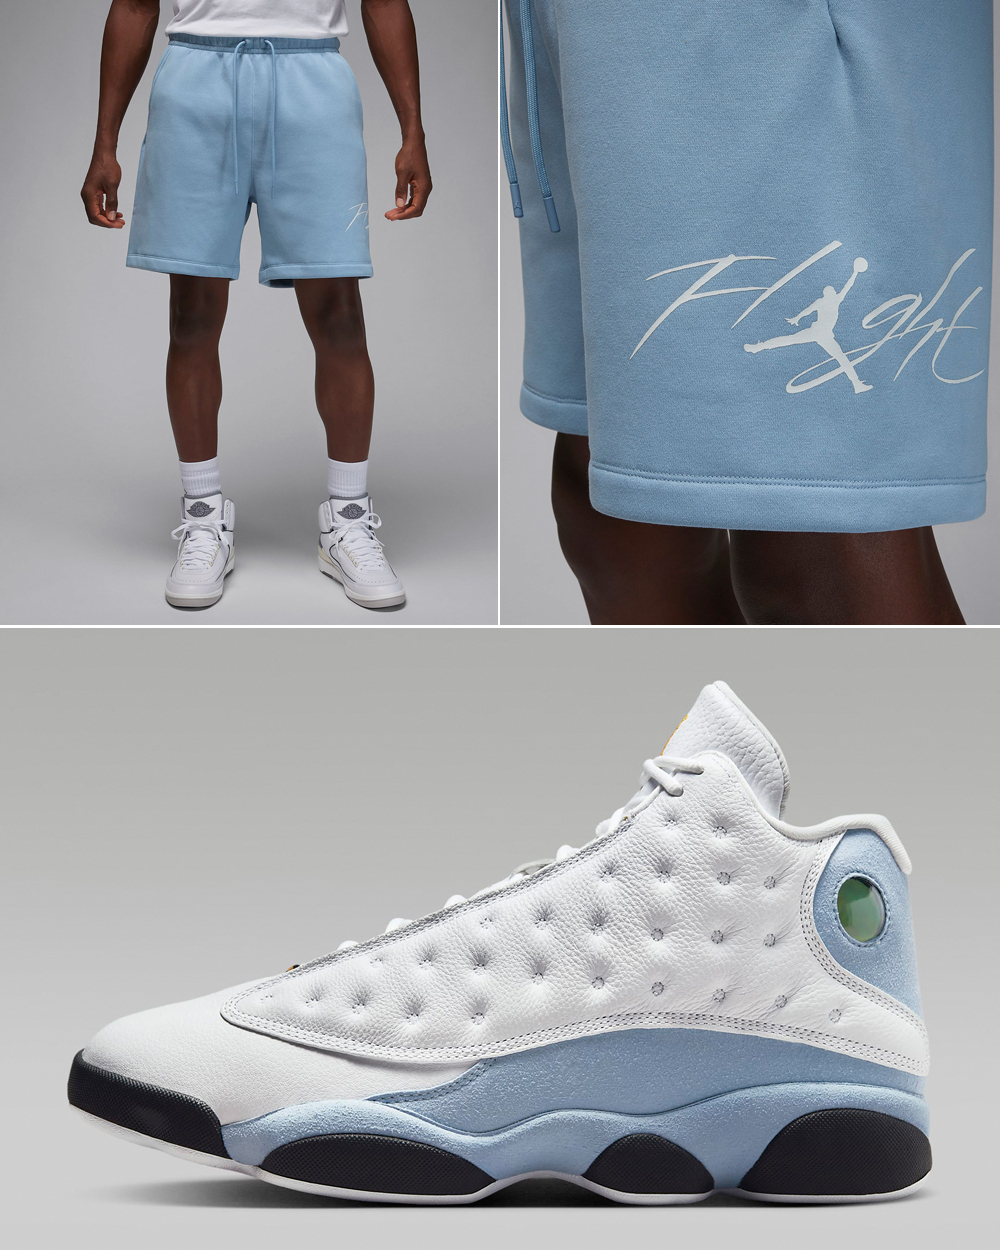 Air-Jordan-13-Blue-Grey-Fleece-Shorts